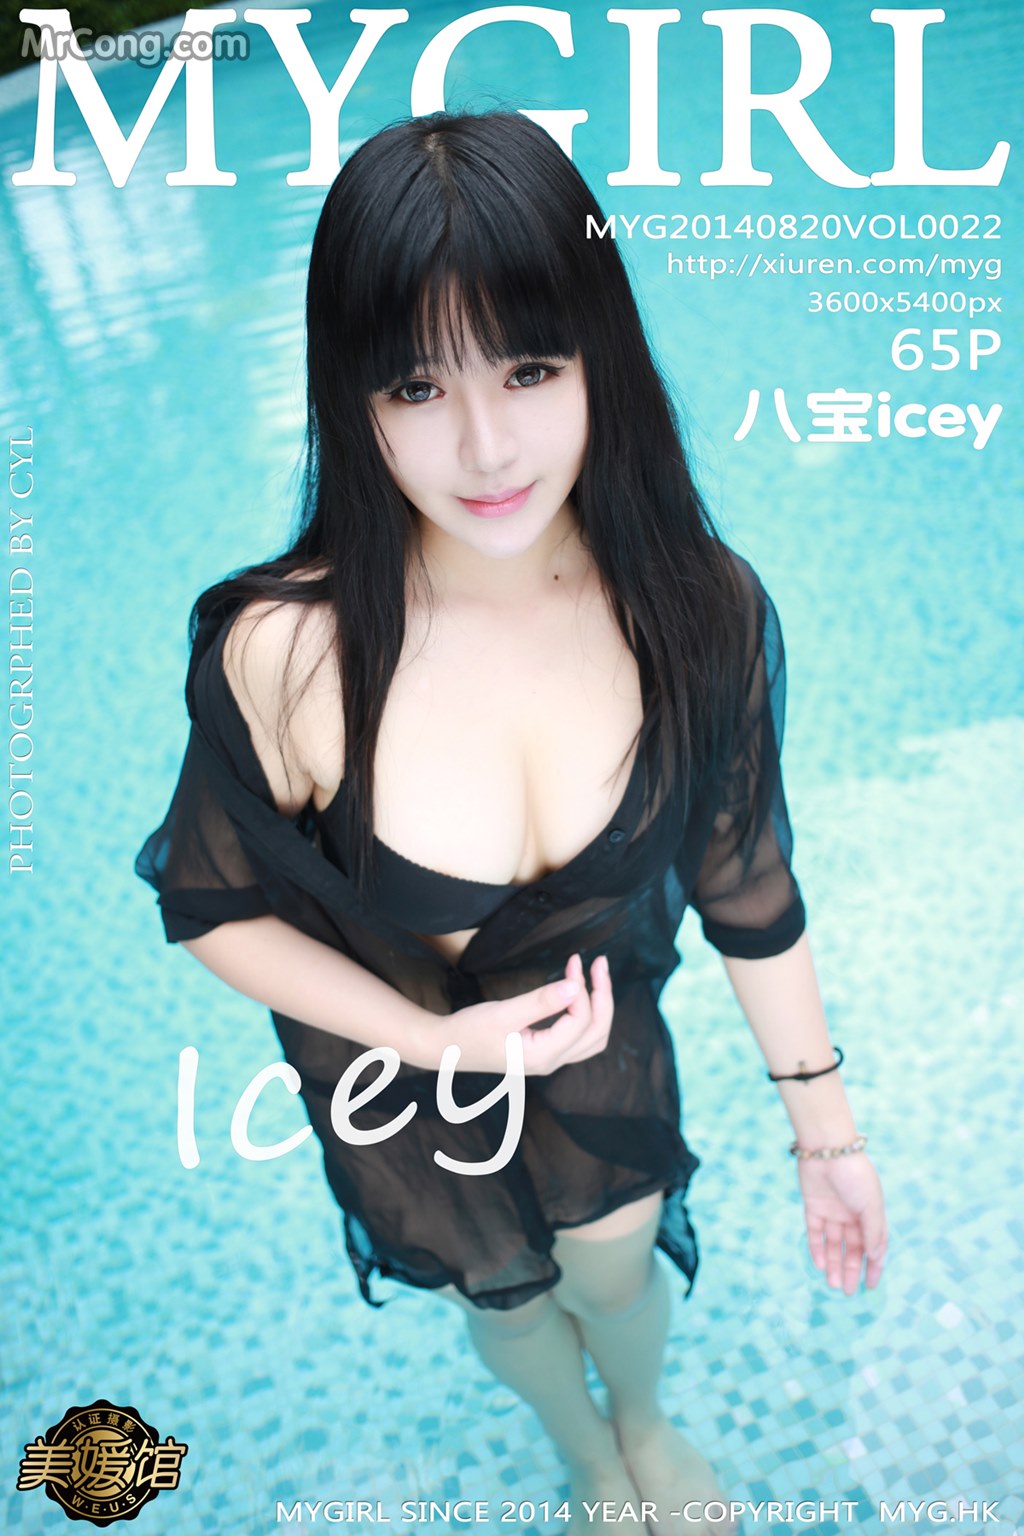 MyGirl Vol.022: Model Ba Bao icey (八宝 icey) (66 pictures) photo 1-0